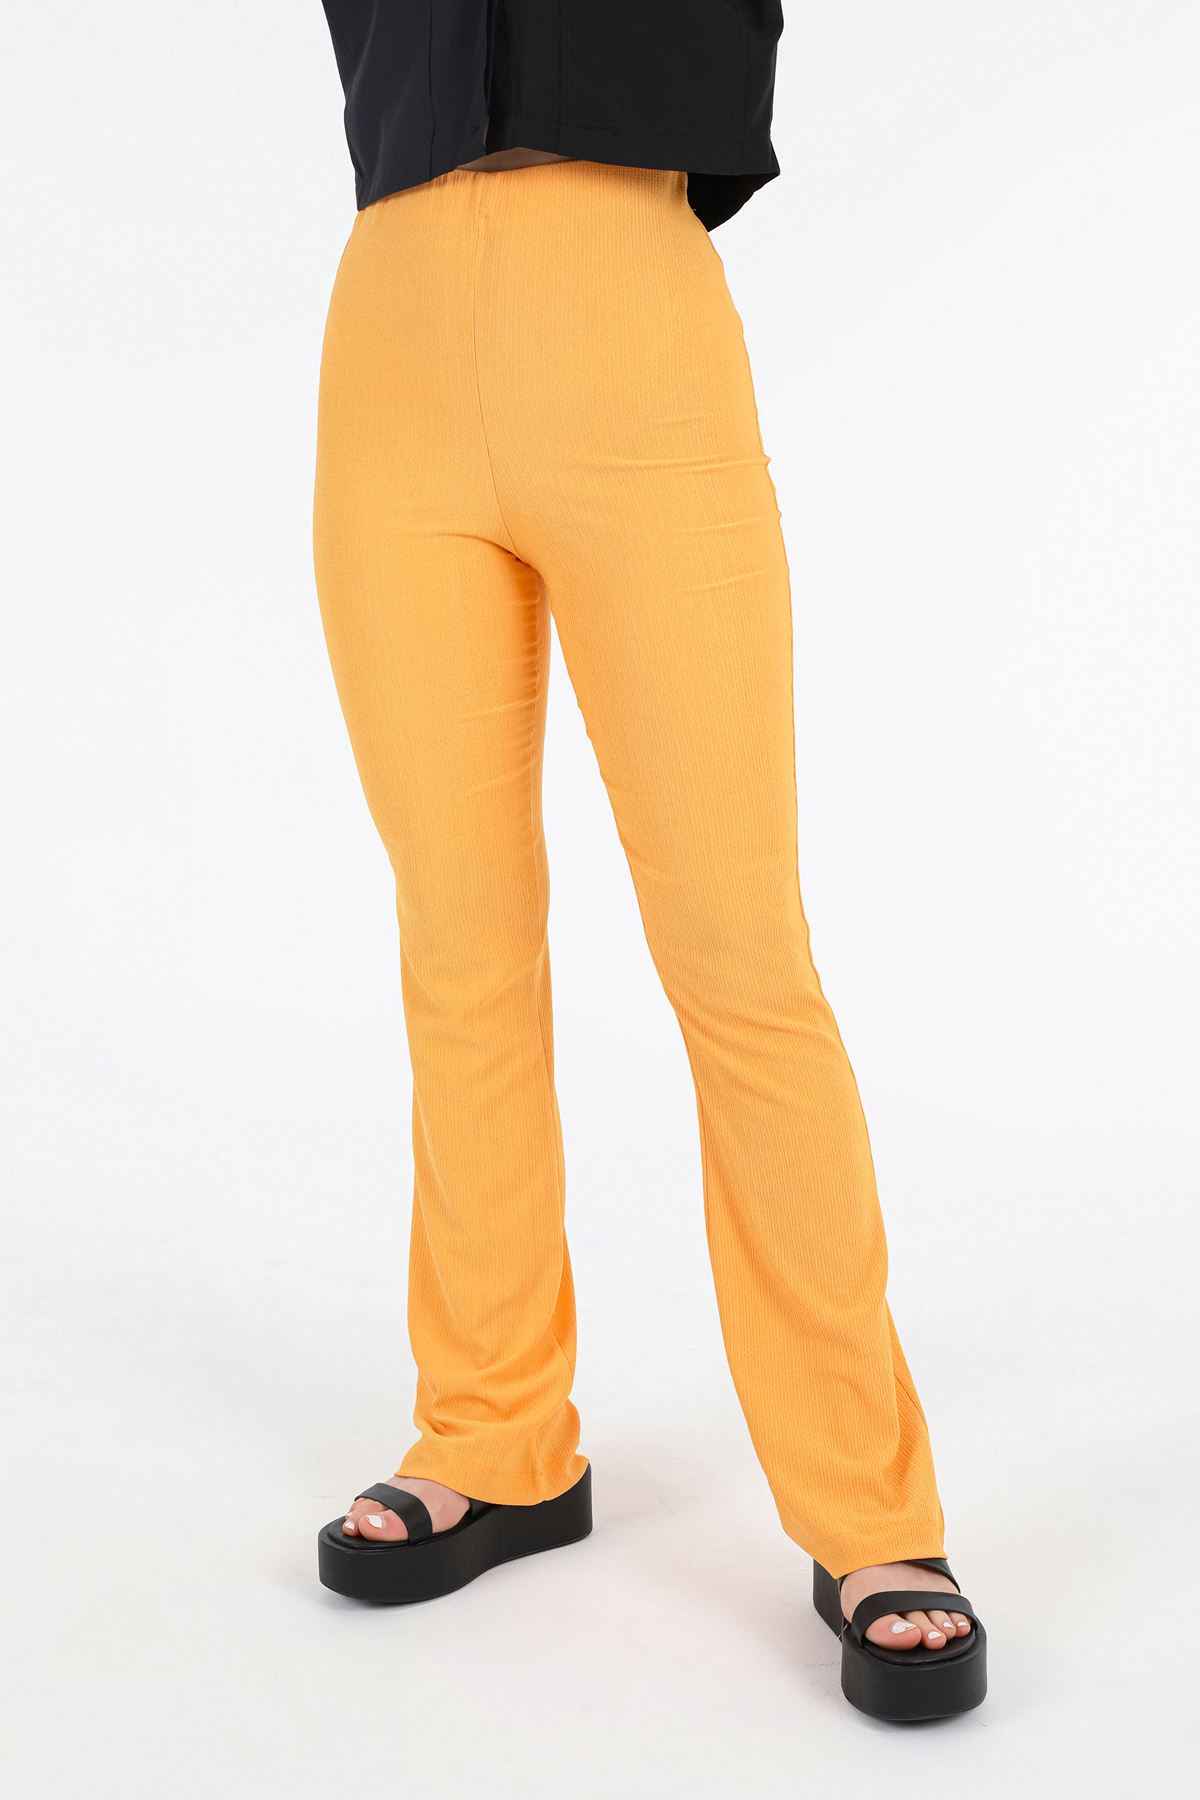 Ocean Mesh Fabric Women Pants-Orange